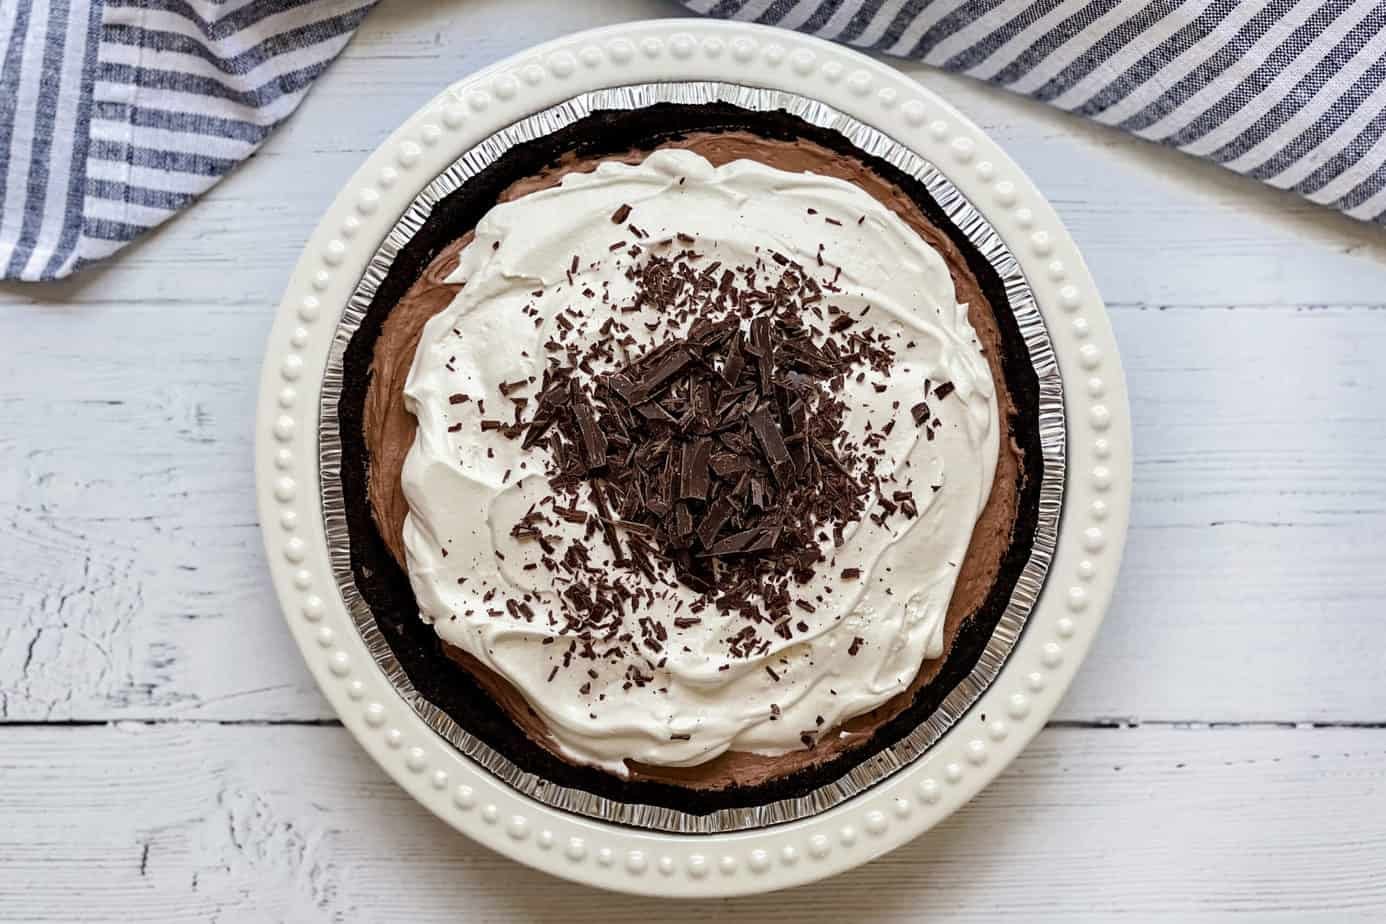 No Bake 3 Ingredient Chocolate Pie